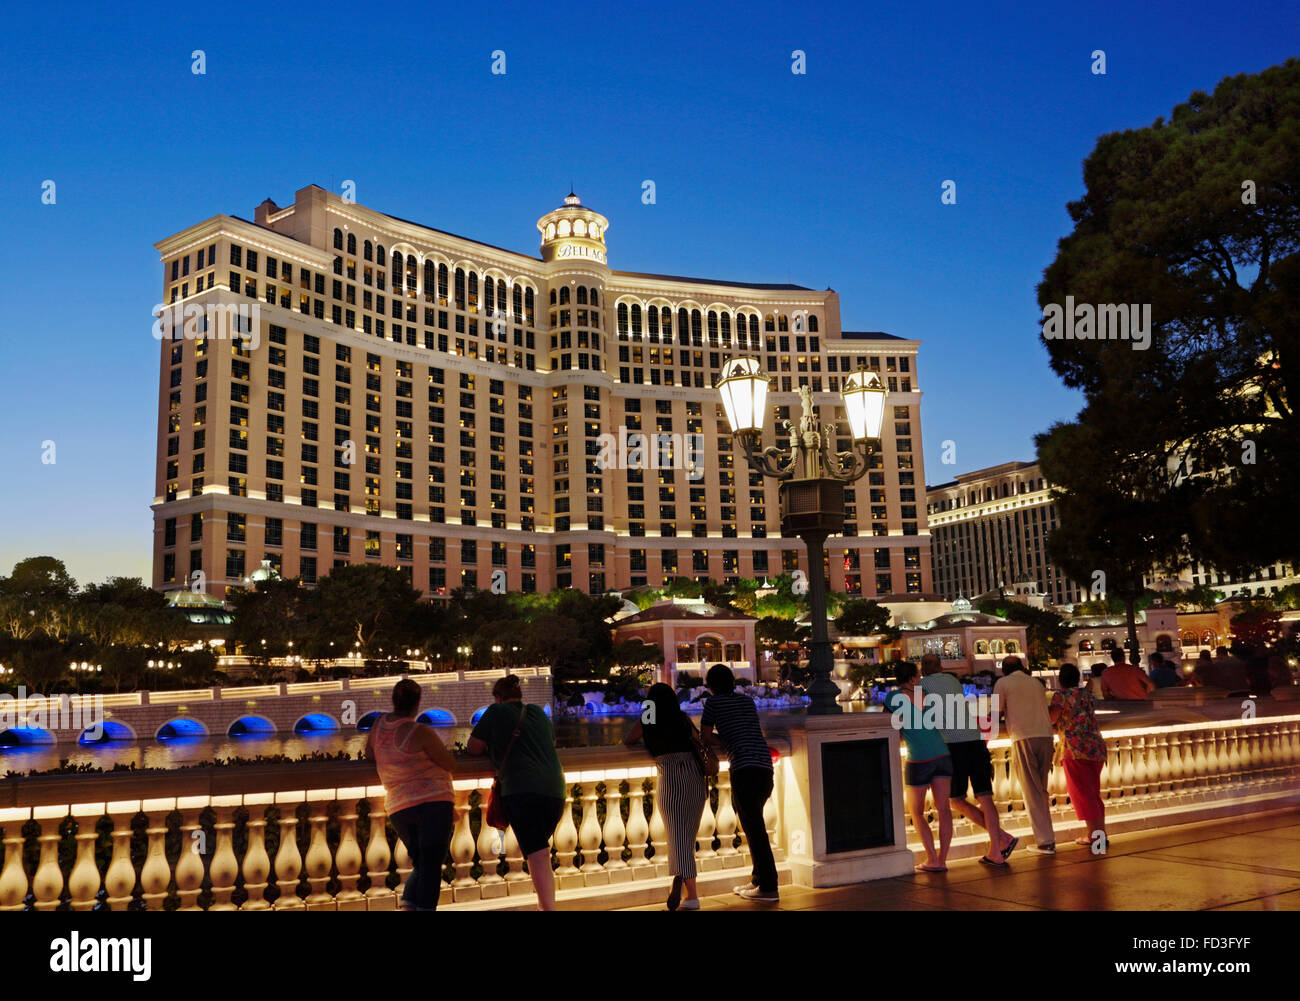 Bellagio hotel and casino, Las Vegas, at night. Stock Photo